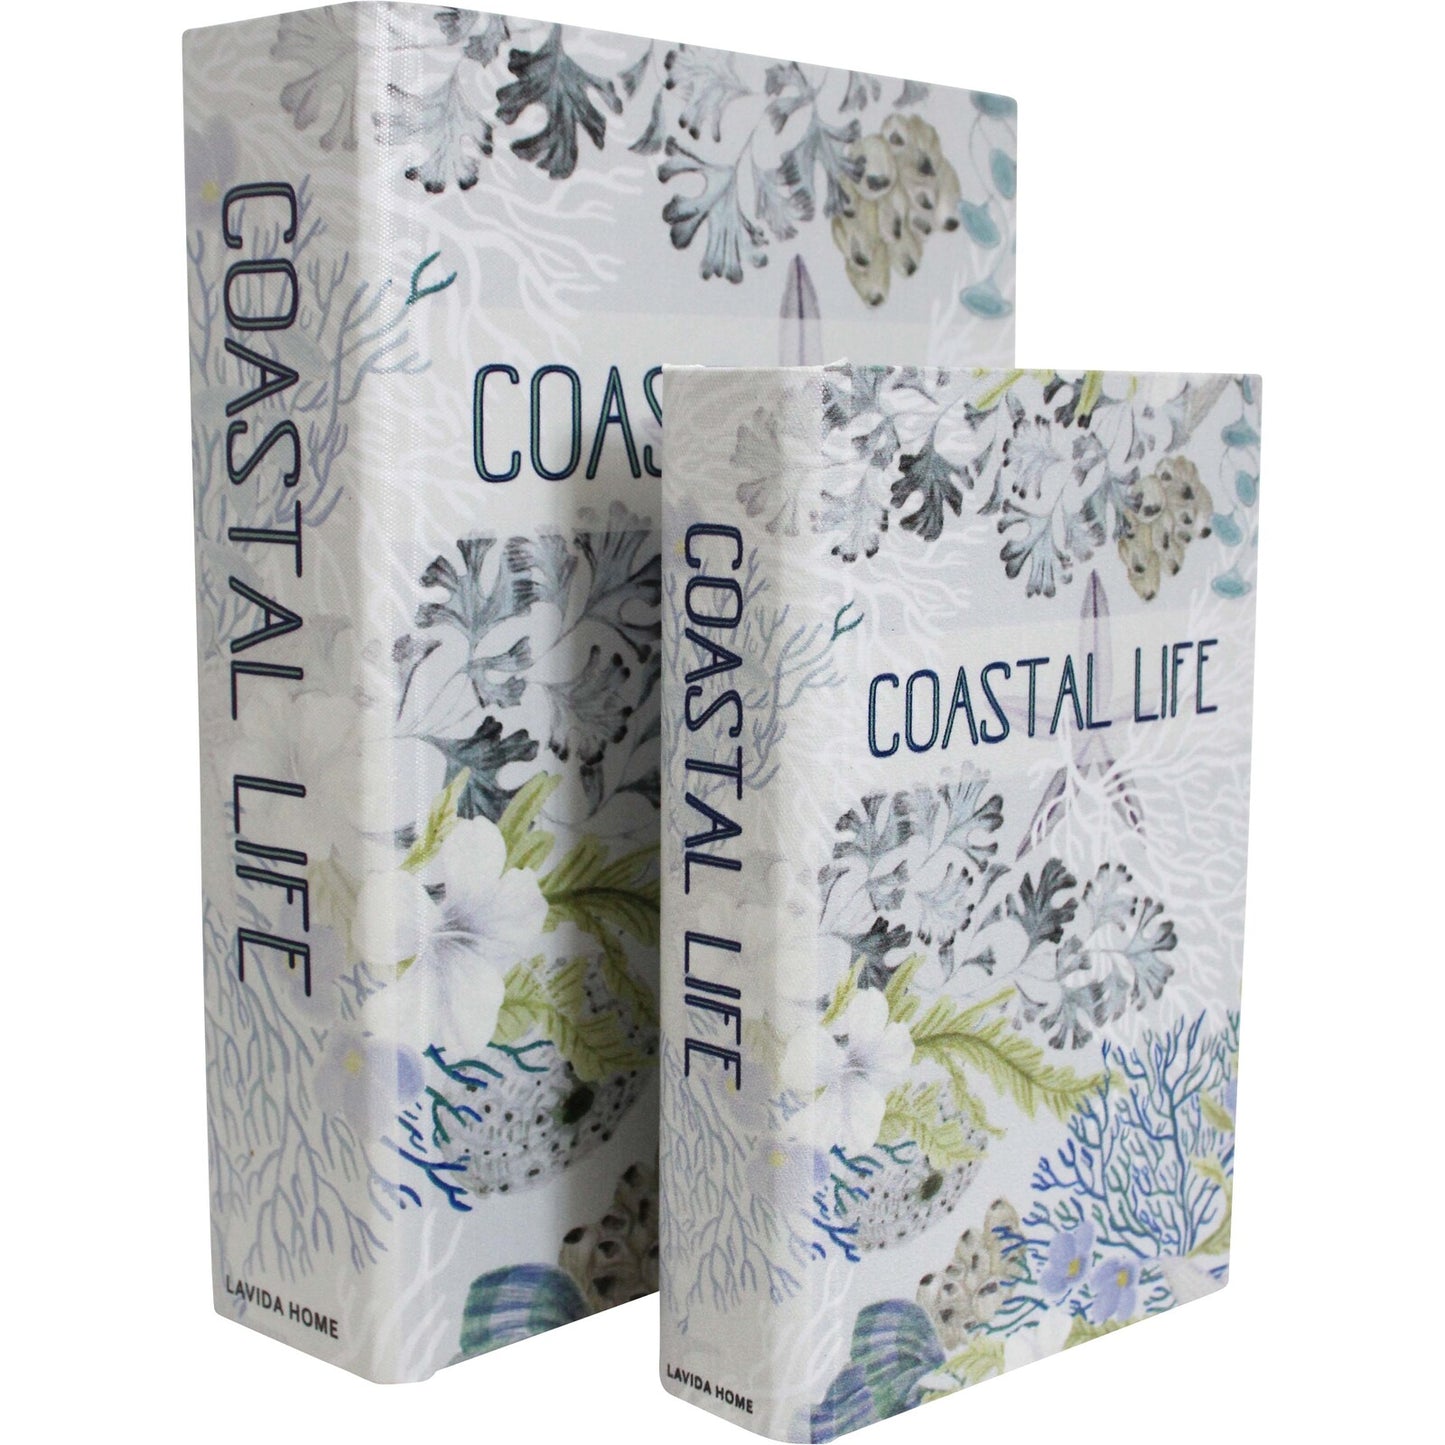 Book Box Coastal Life